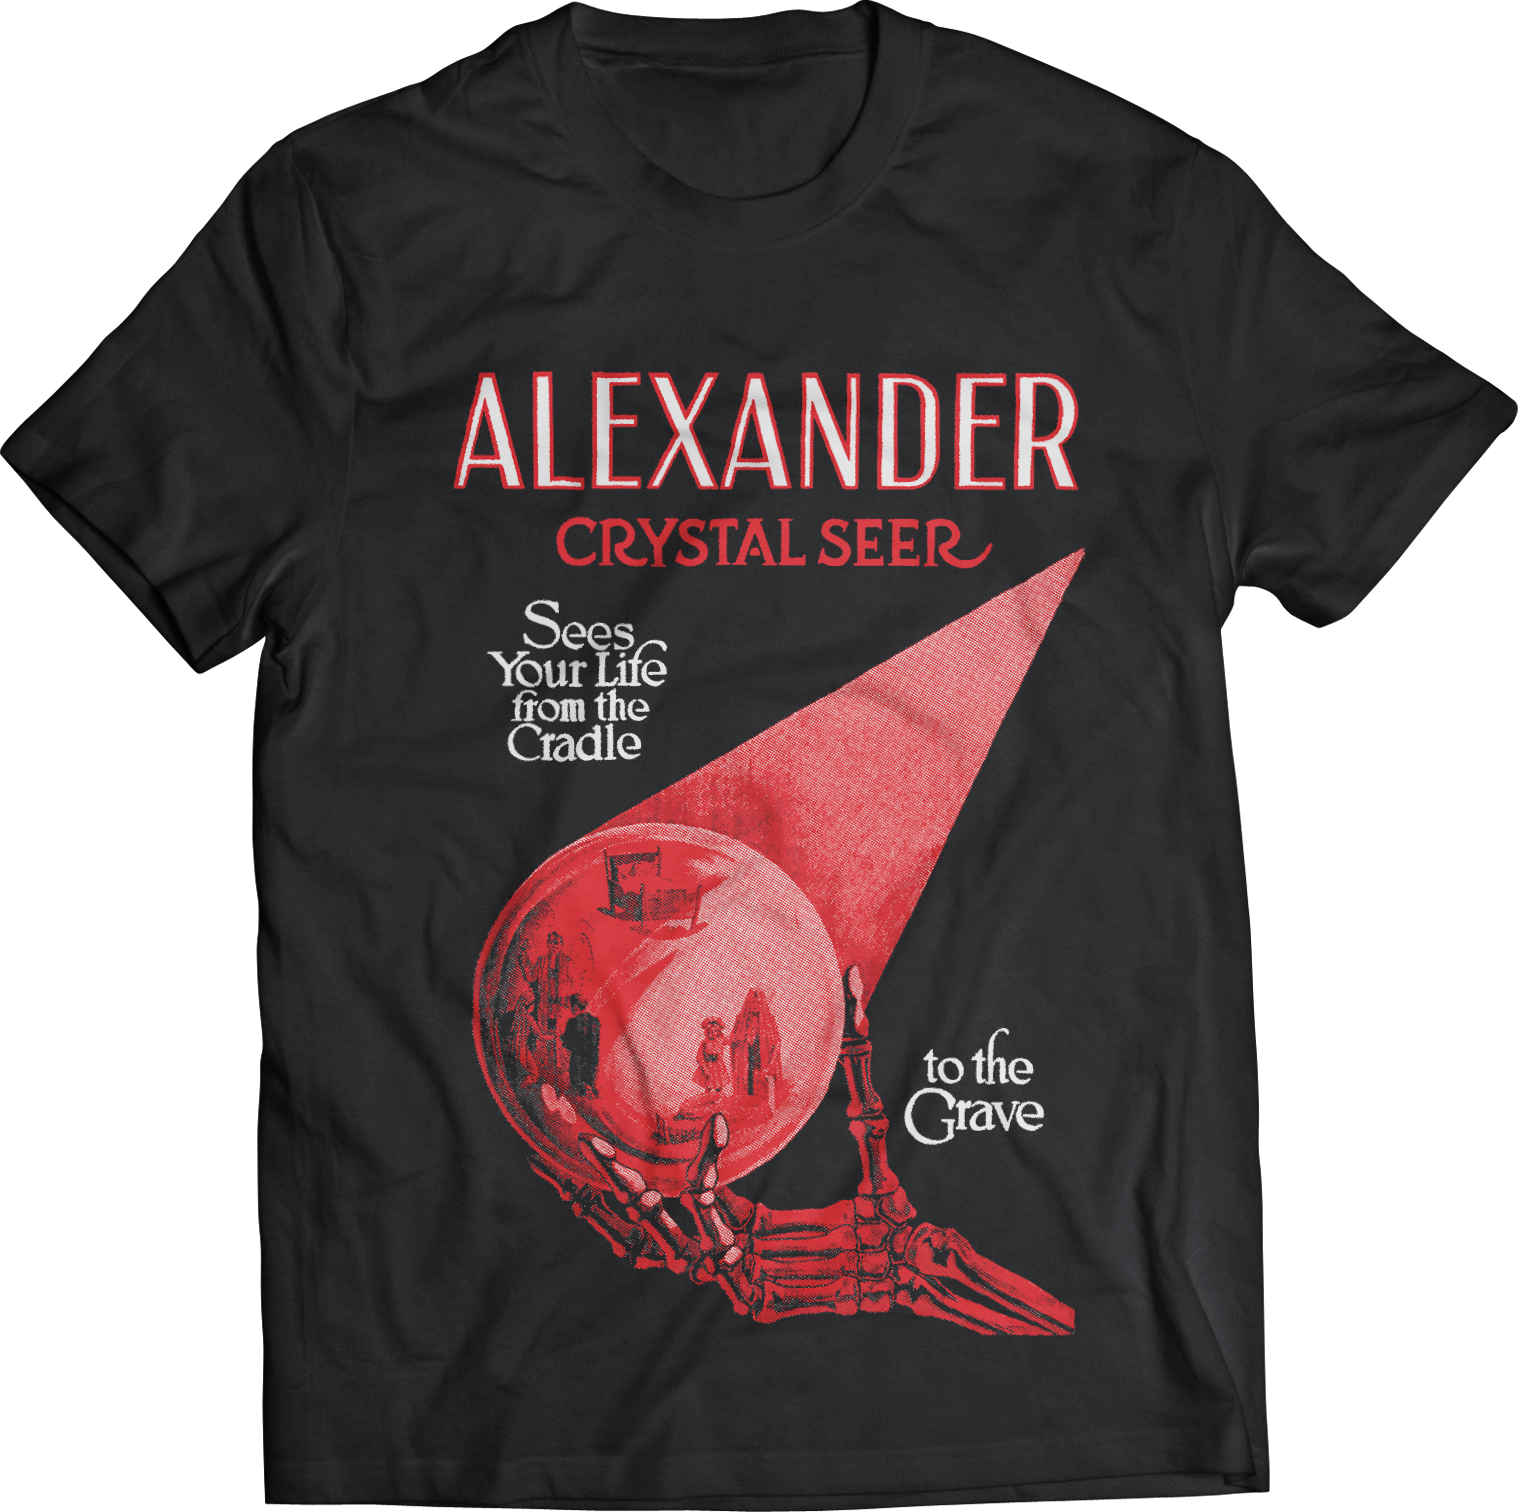 ATOM AGE: "ALEXANDER THE CRYSTAL SEER" T-SHIRT